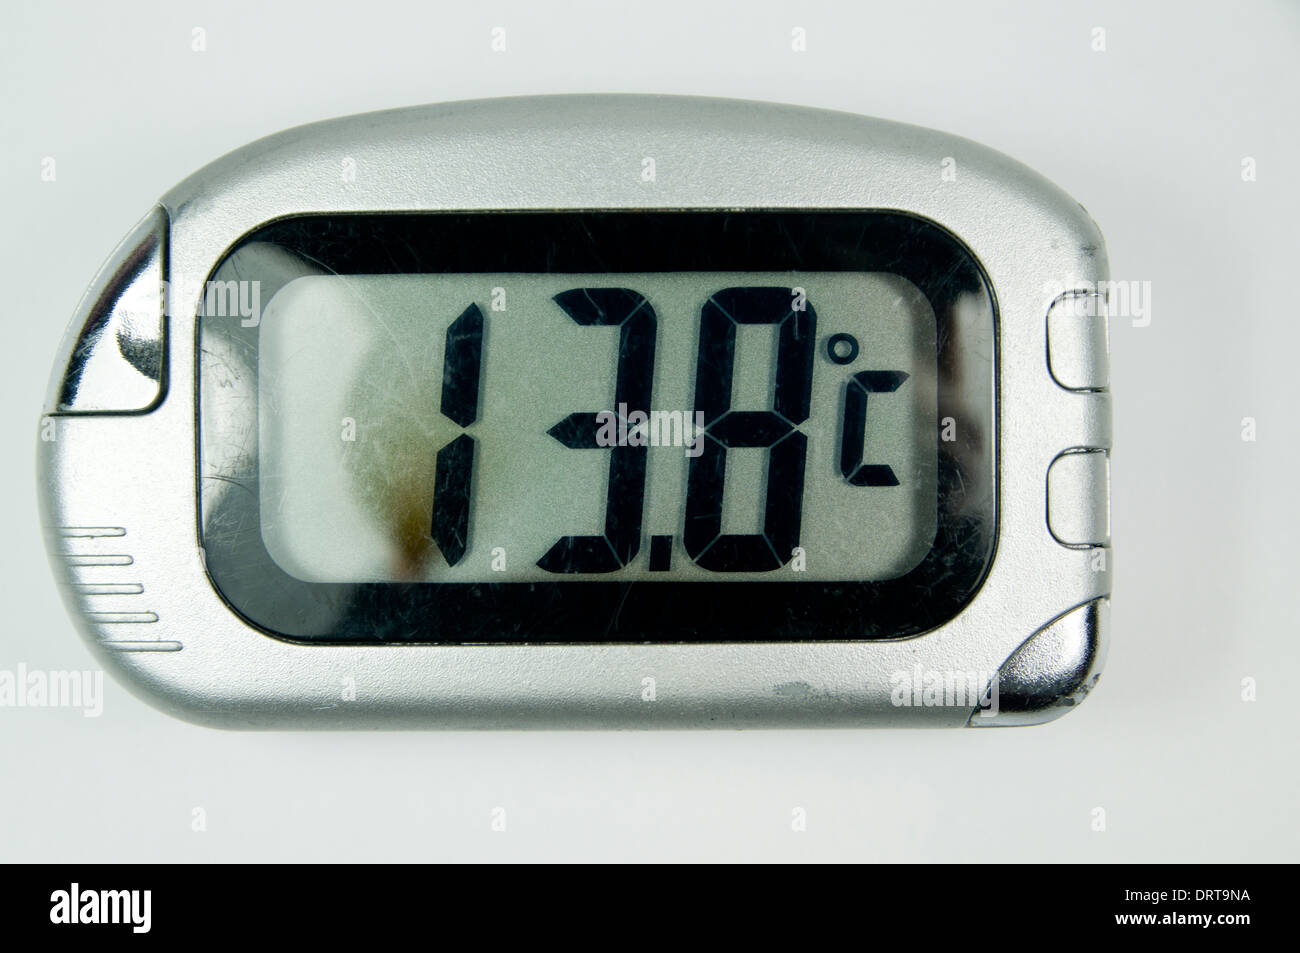 Digital-Thermometer zeigt 13,8 ° C. Stockfoto